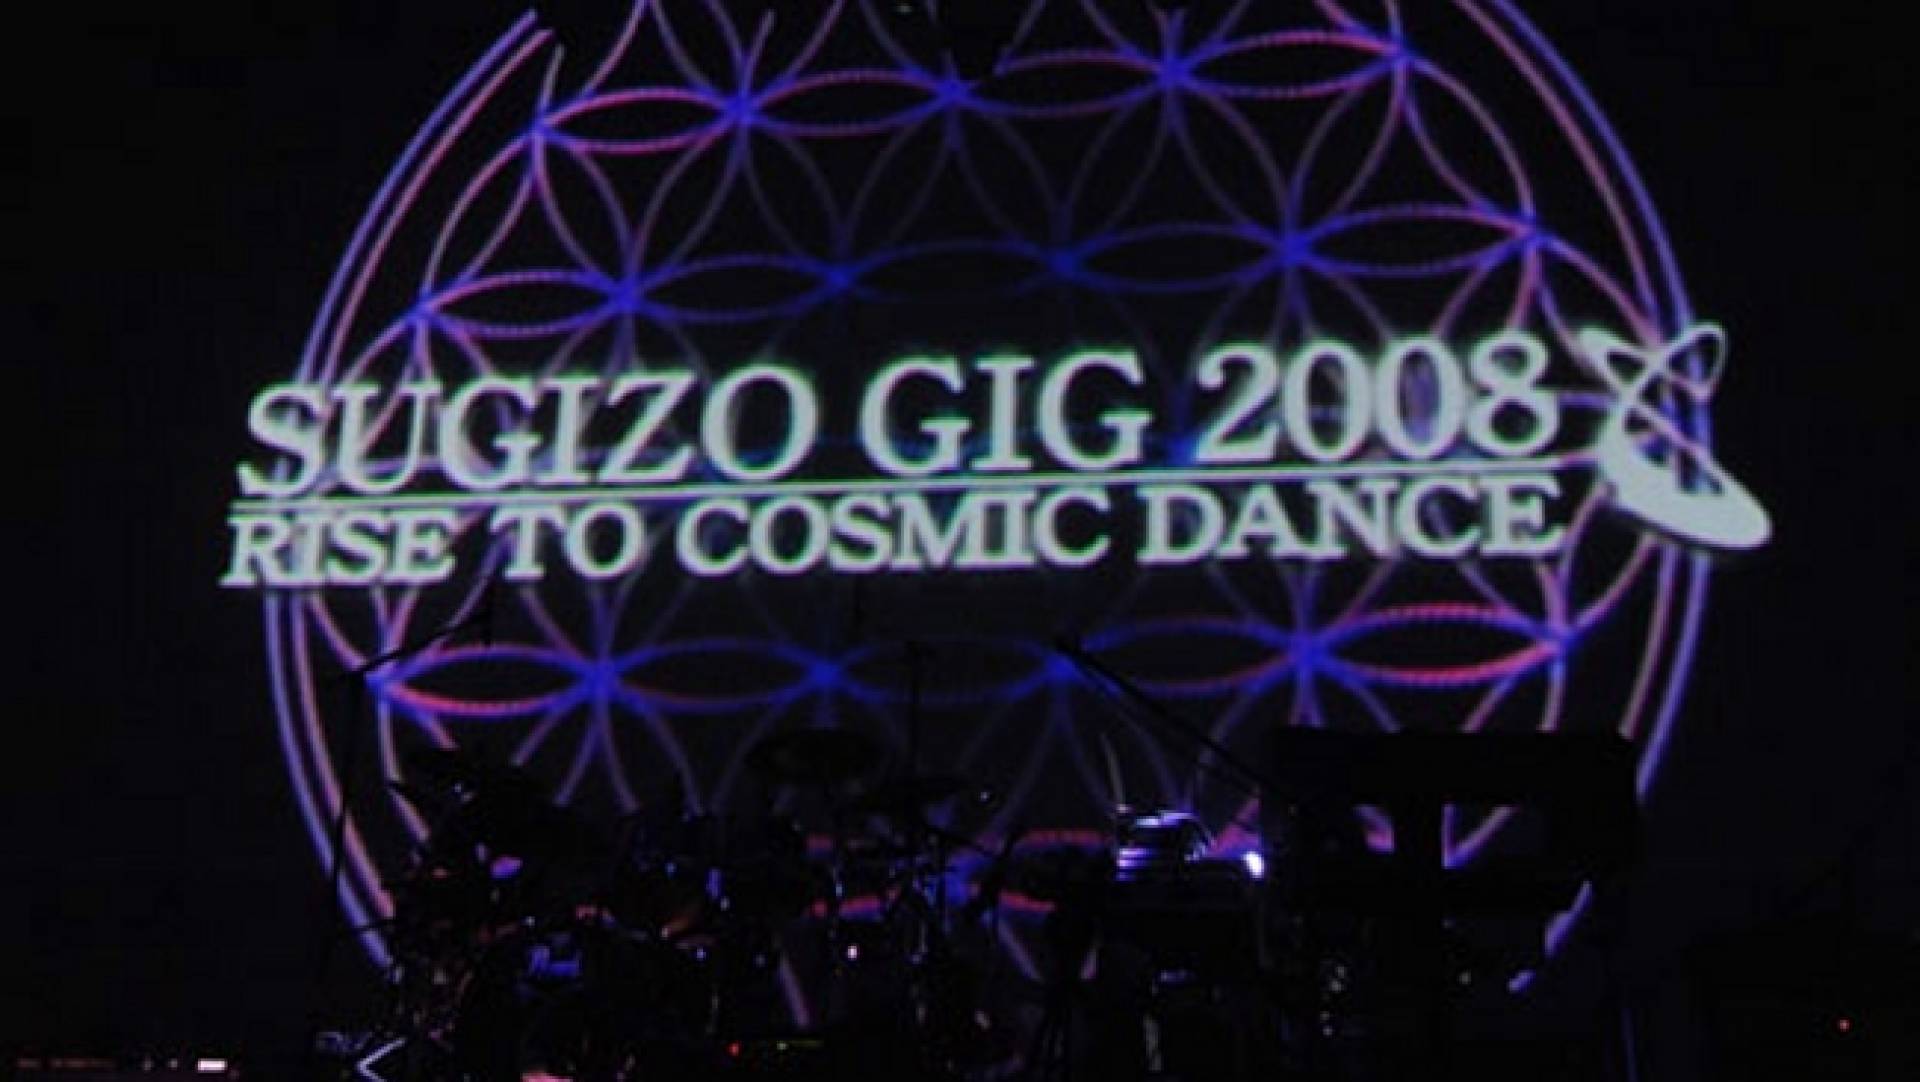 SUGIZO GIG 2008 ~RISE TO COSMIC DANCE~